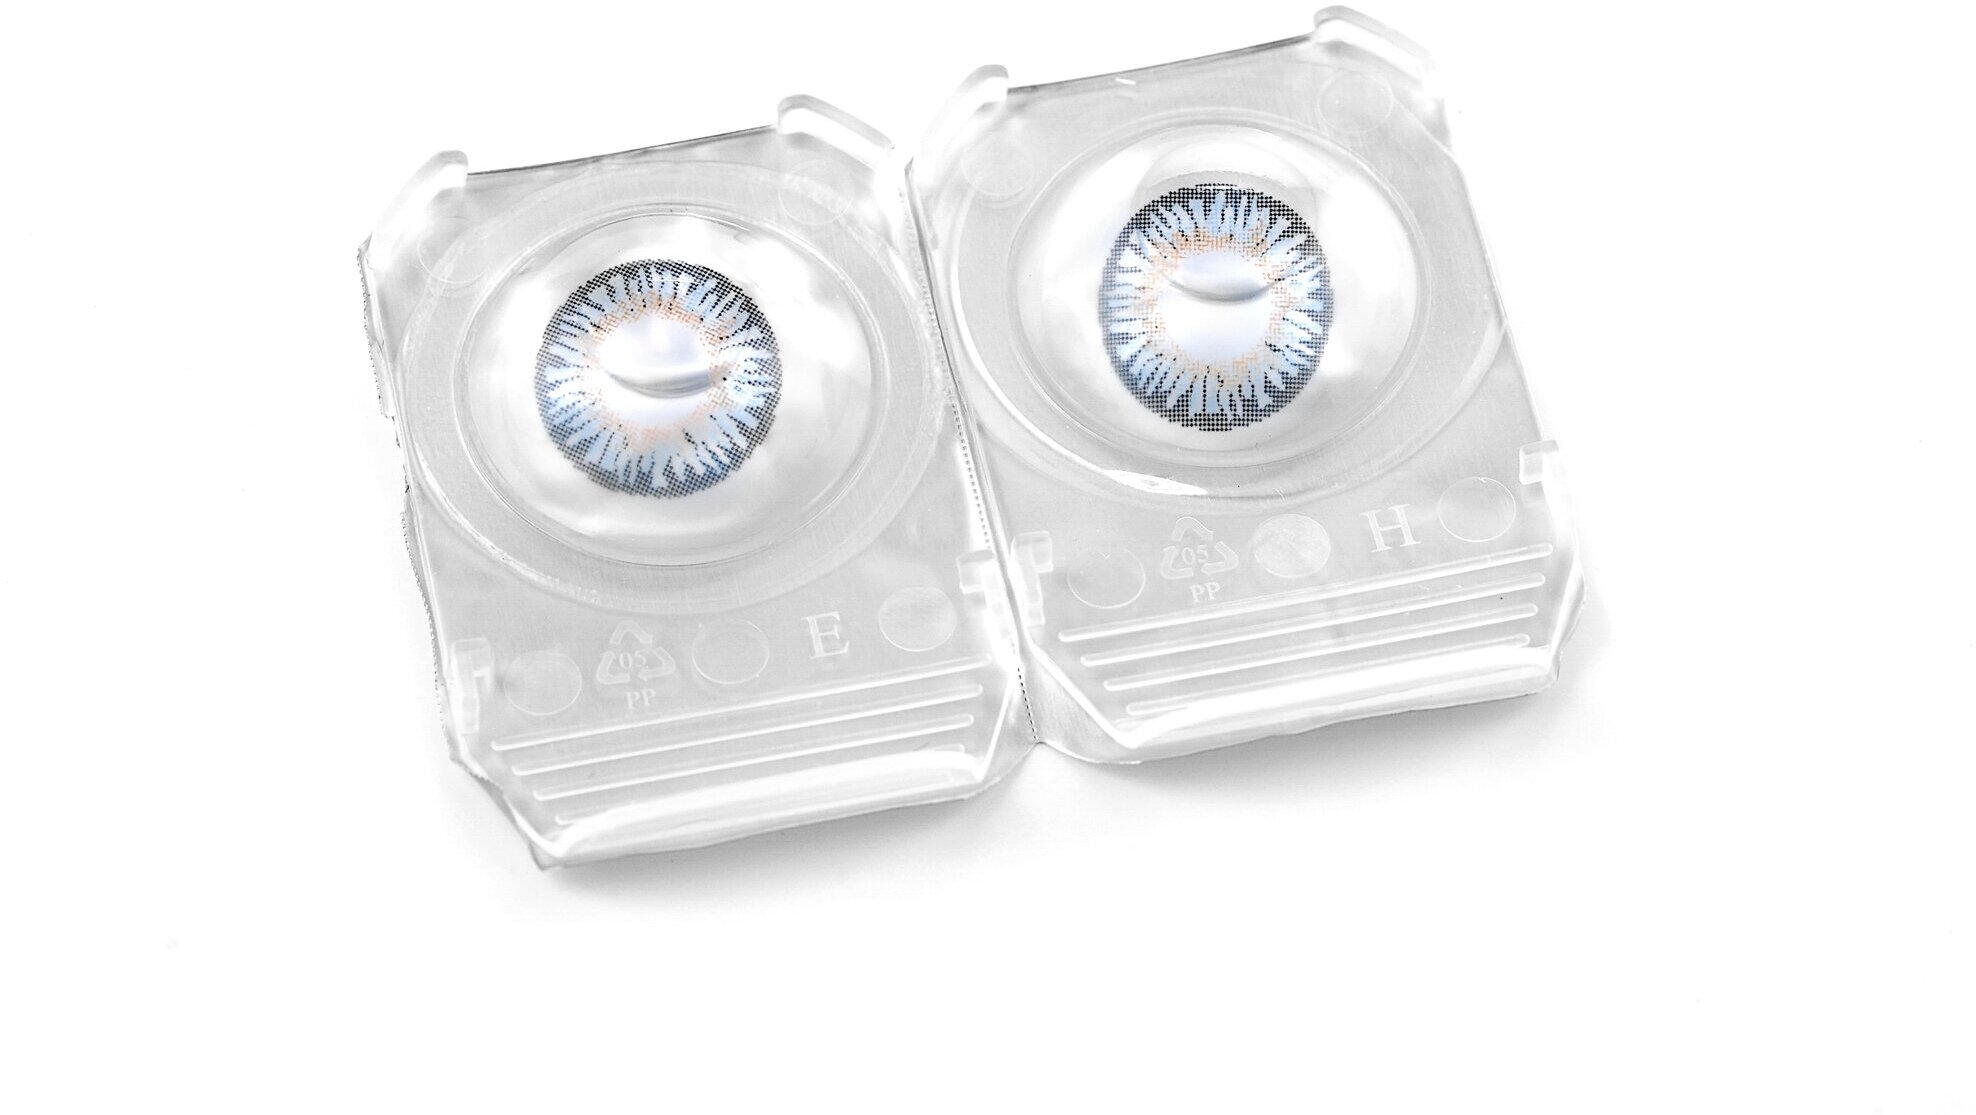 Цветные контактные линзы OKVision Fusion 3 месяца, -2.00 8.6, Blue 3, 2 шт.